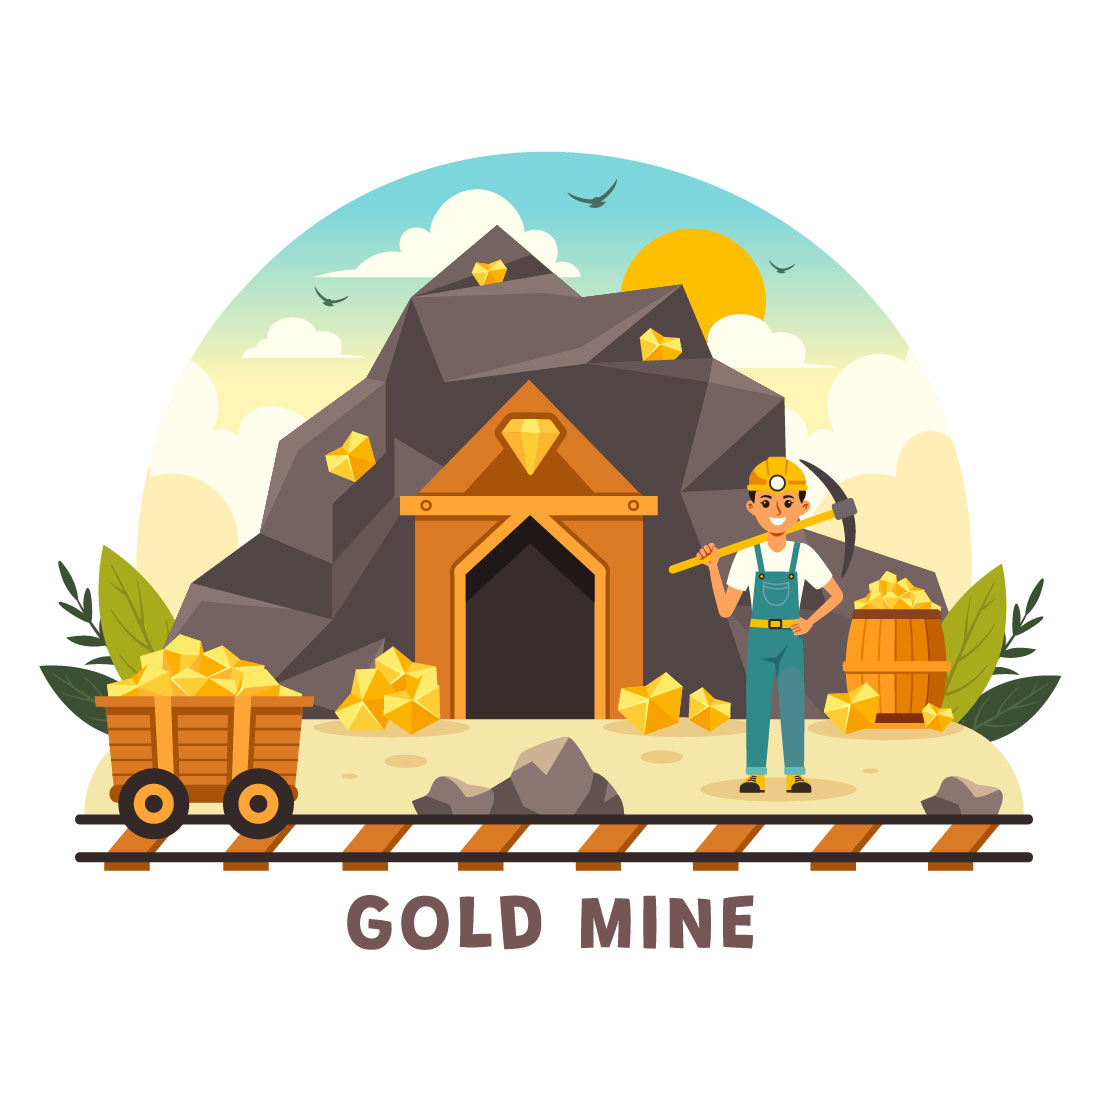 10 Gold Mine Illustration preview image.